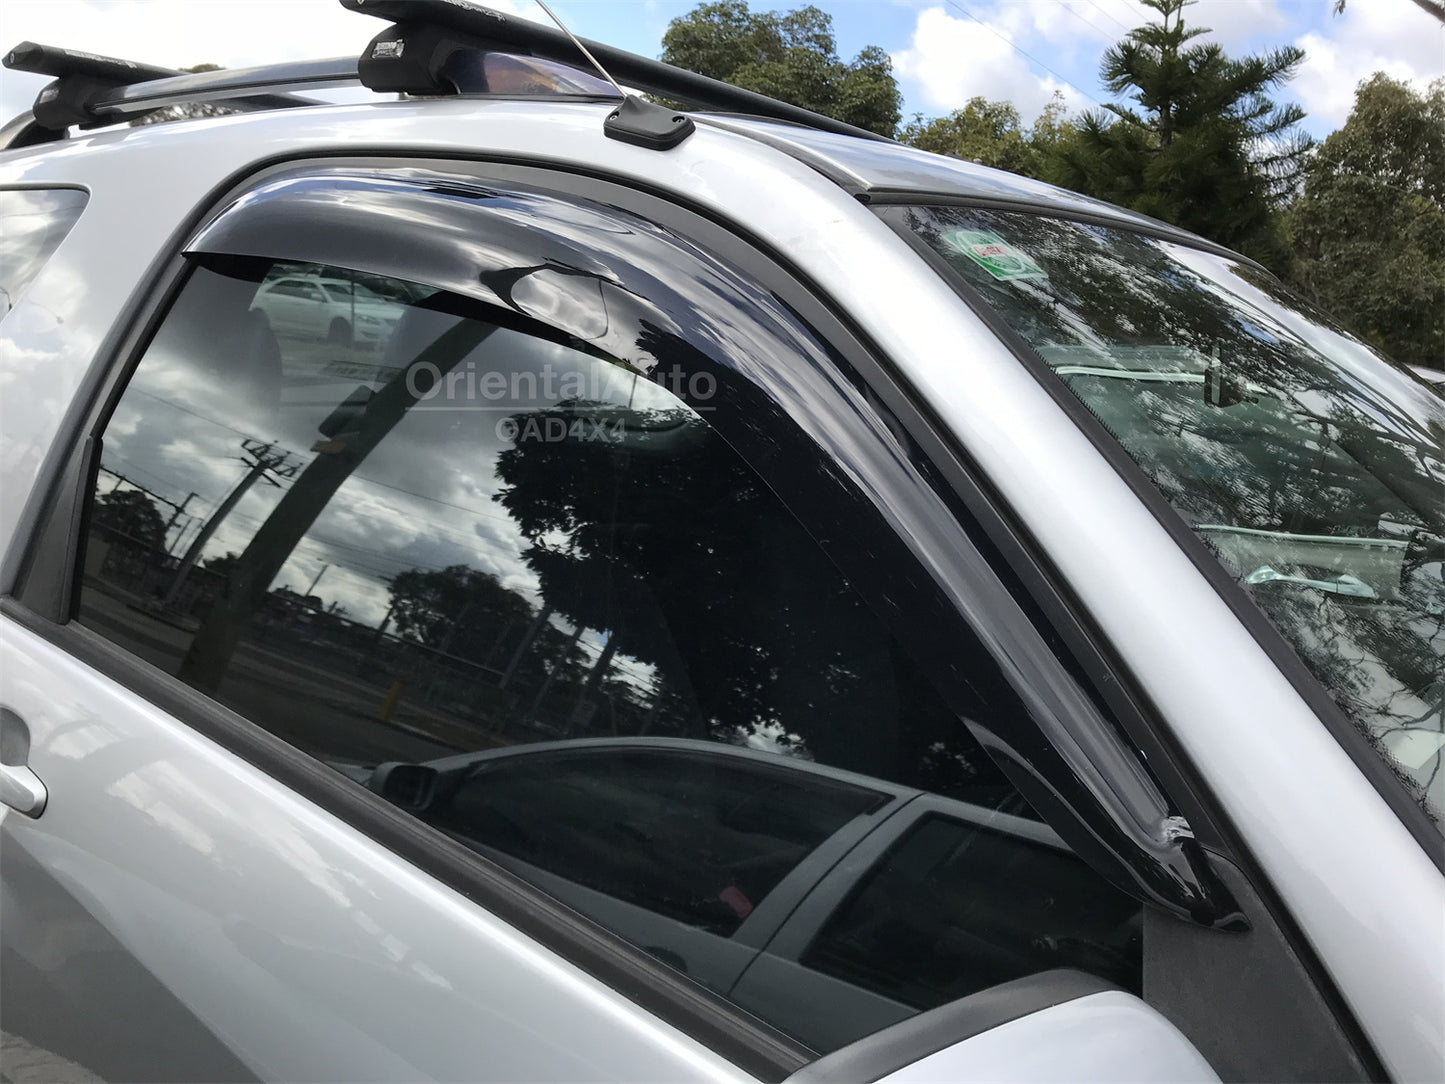 Premium Weathershields Weather Shields Window Visor For Toyota RAV4 2000-2006 3 Doors